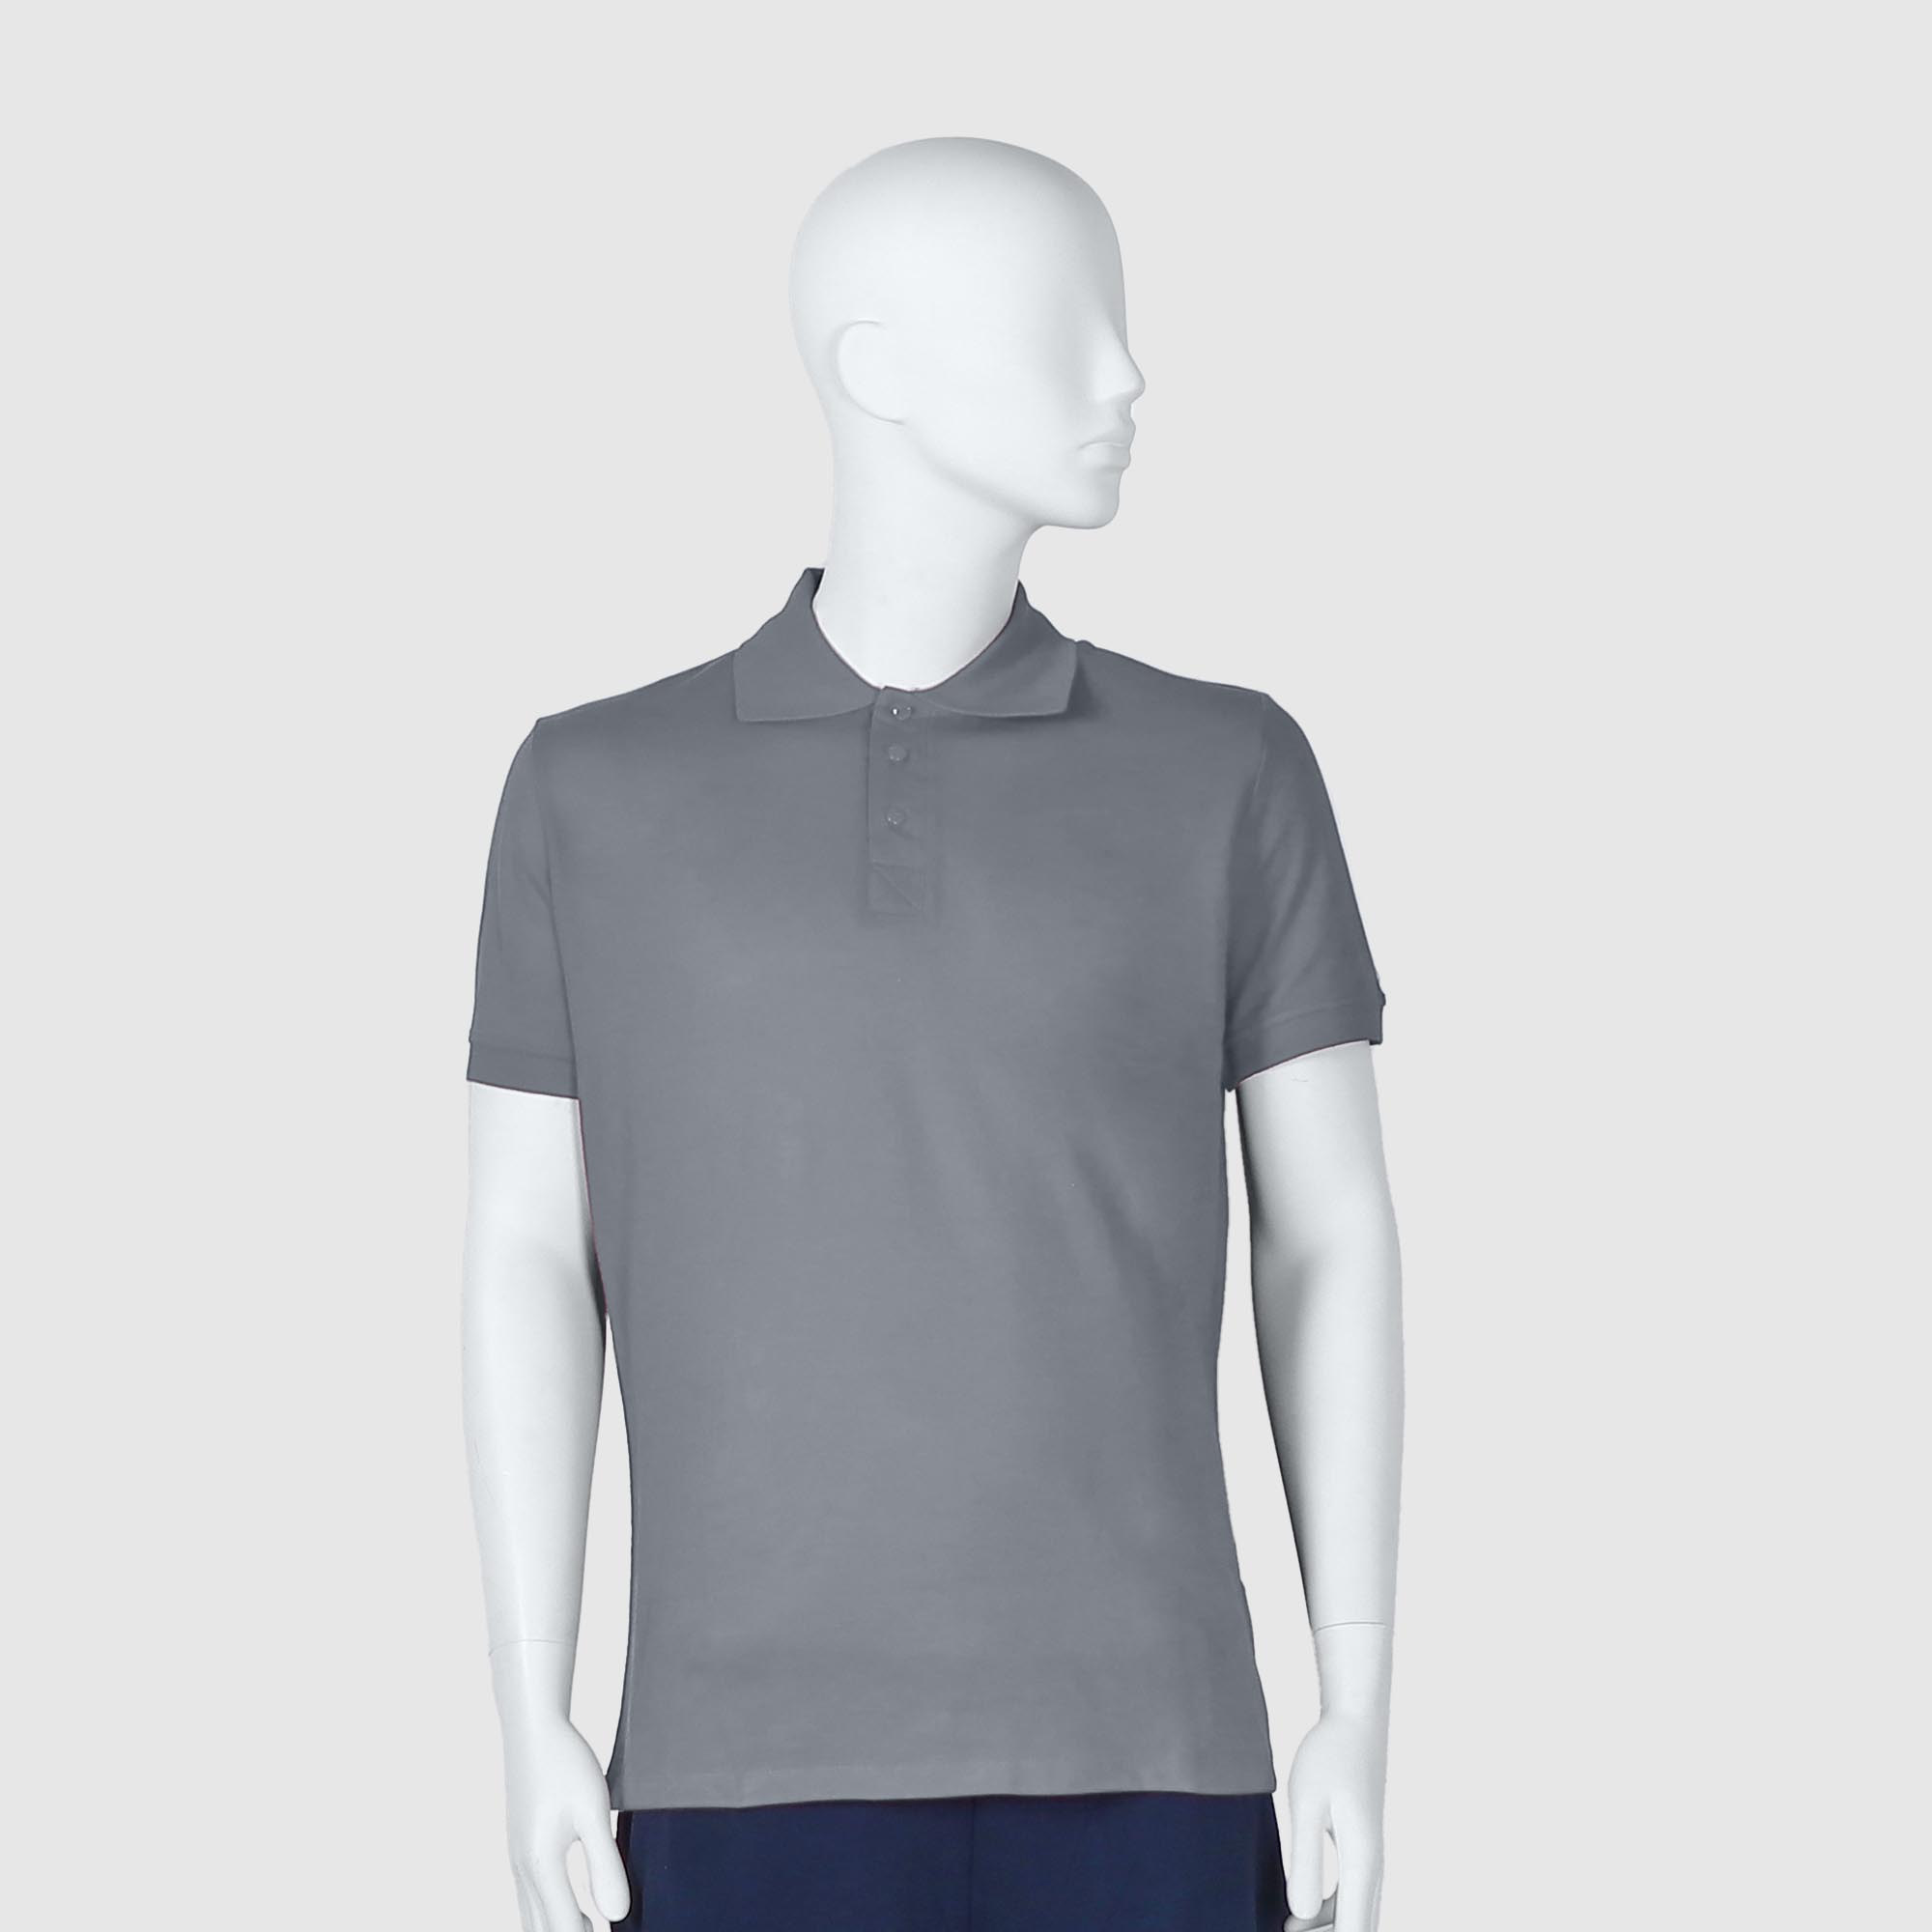 Мужская футболка-поло Diva Teks серая (DTD-11), цвет серый, размер 44-46 - фото 1